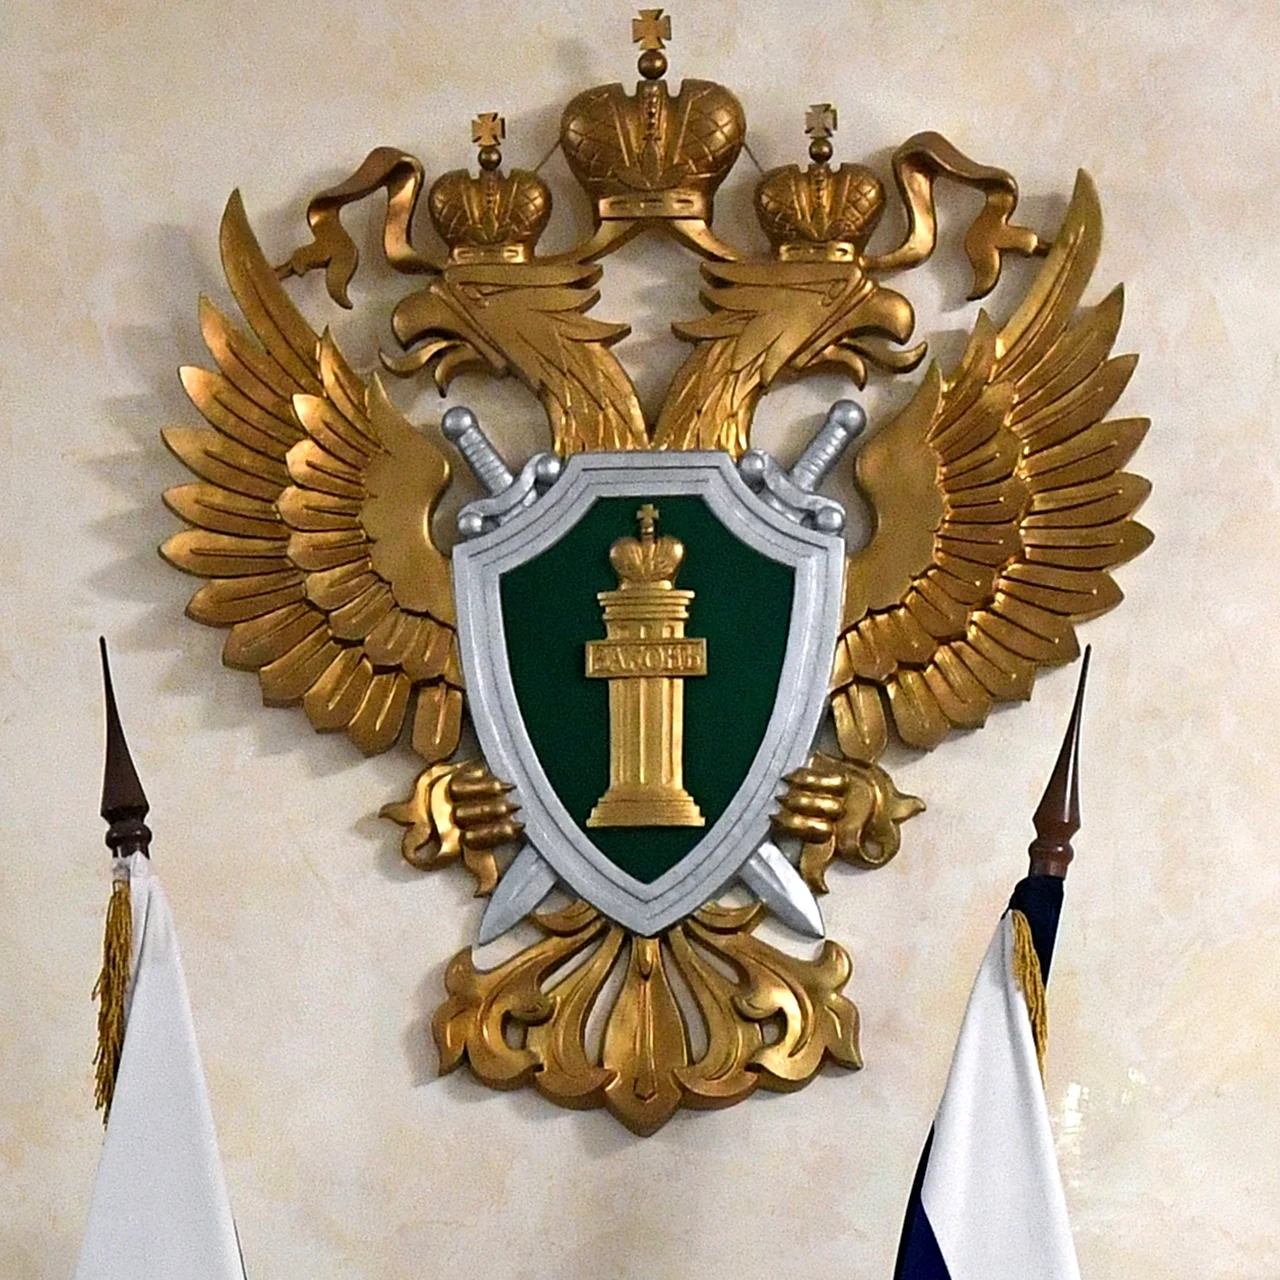 Флаг прокуратуры РФ